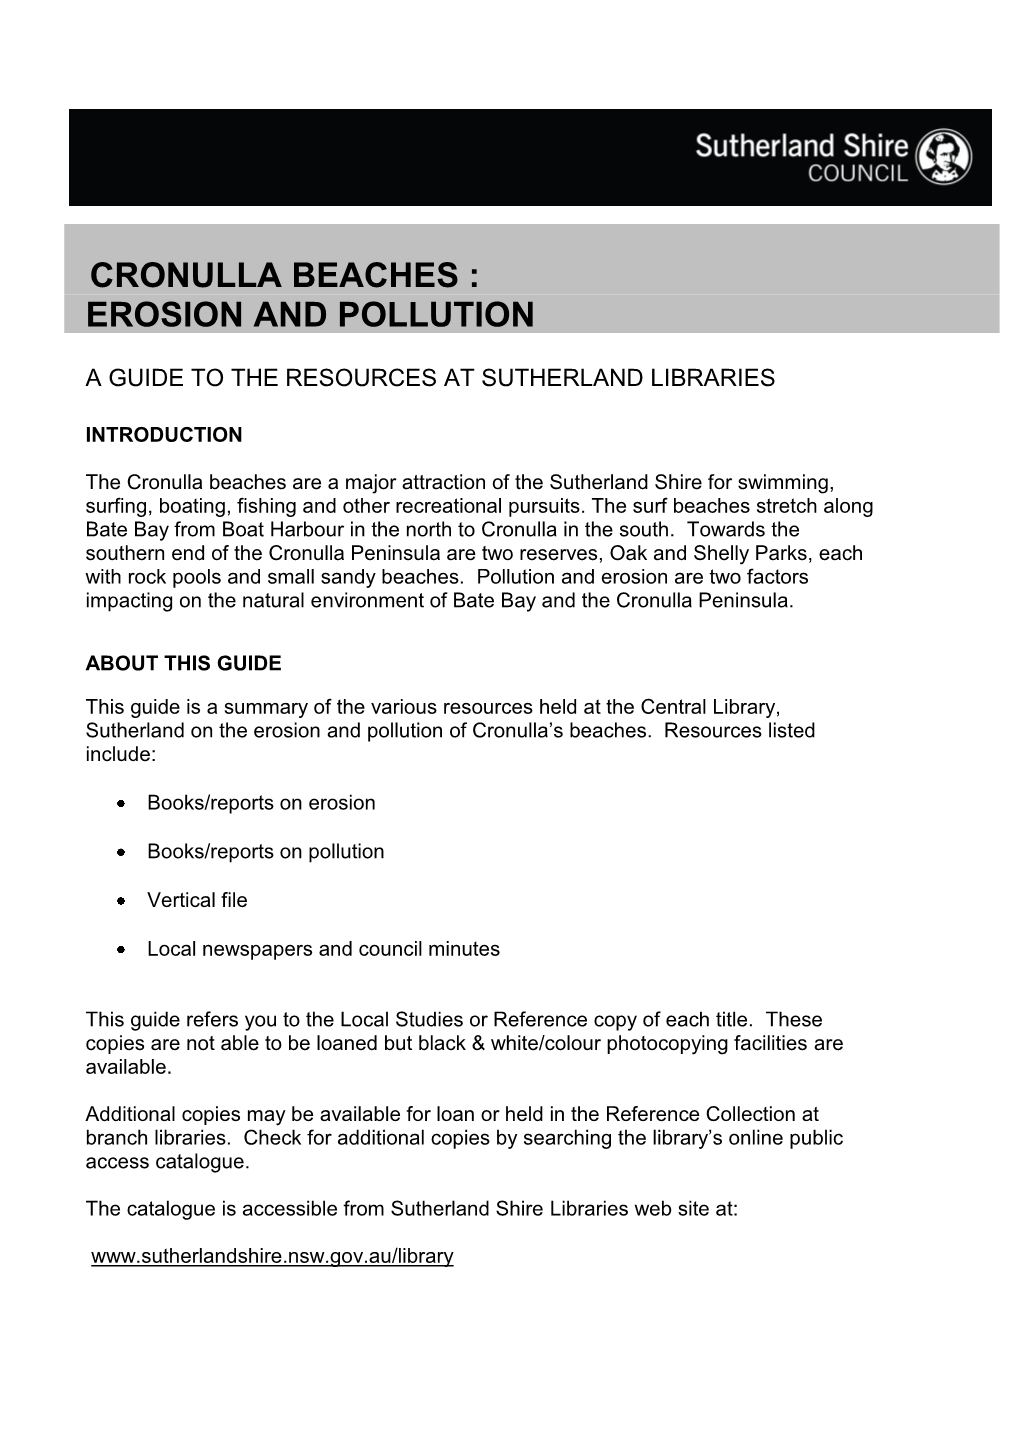 Cronulla Beaches : Erosion and Pollution